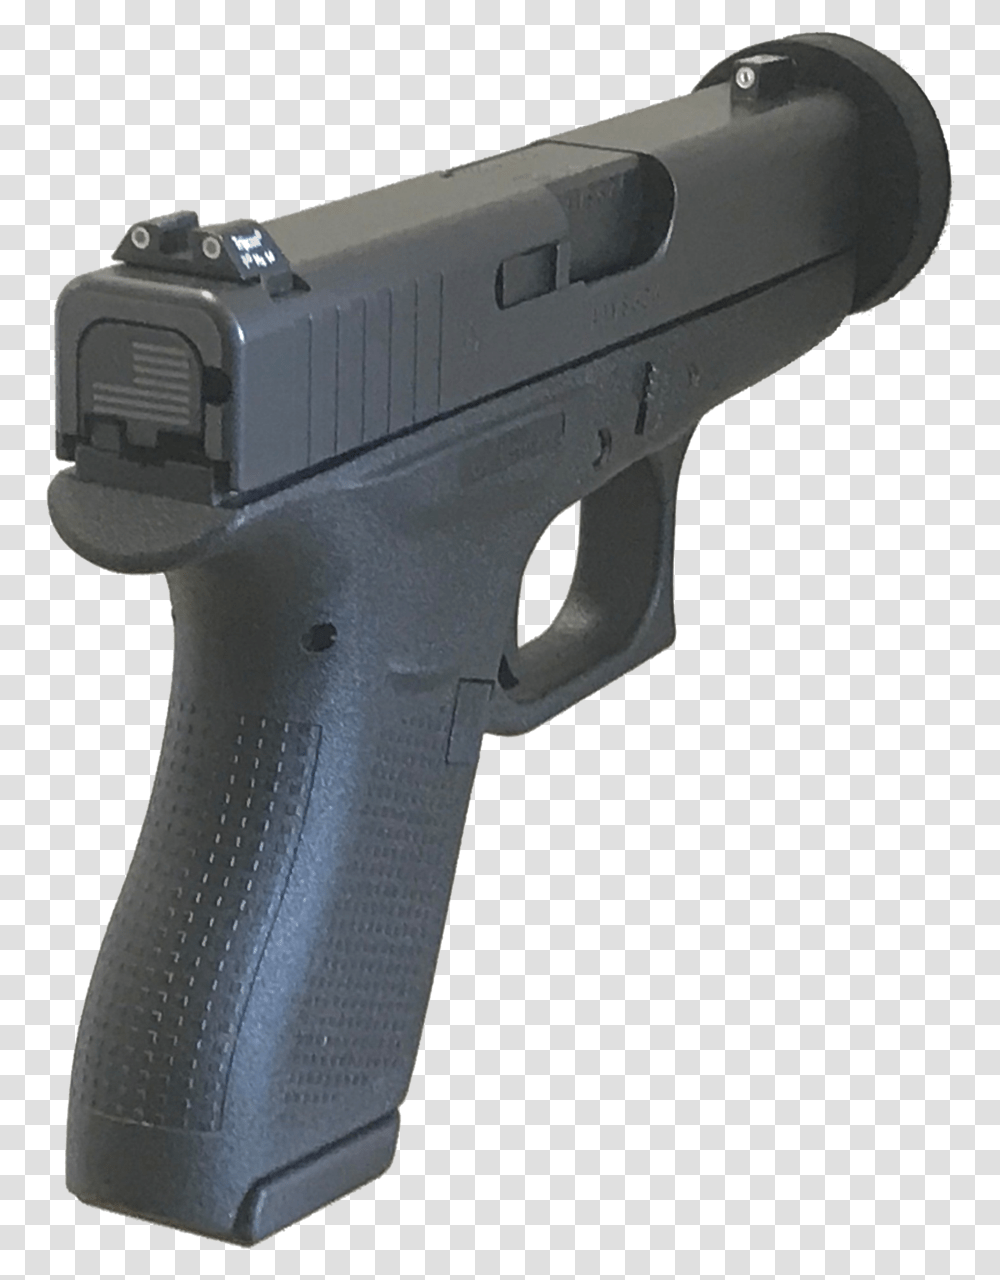 Glock 19 Glock 17 4 5mm Wiatrwka, Gun, Weapon, Weaponry, Handgun Transparent Png